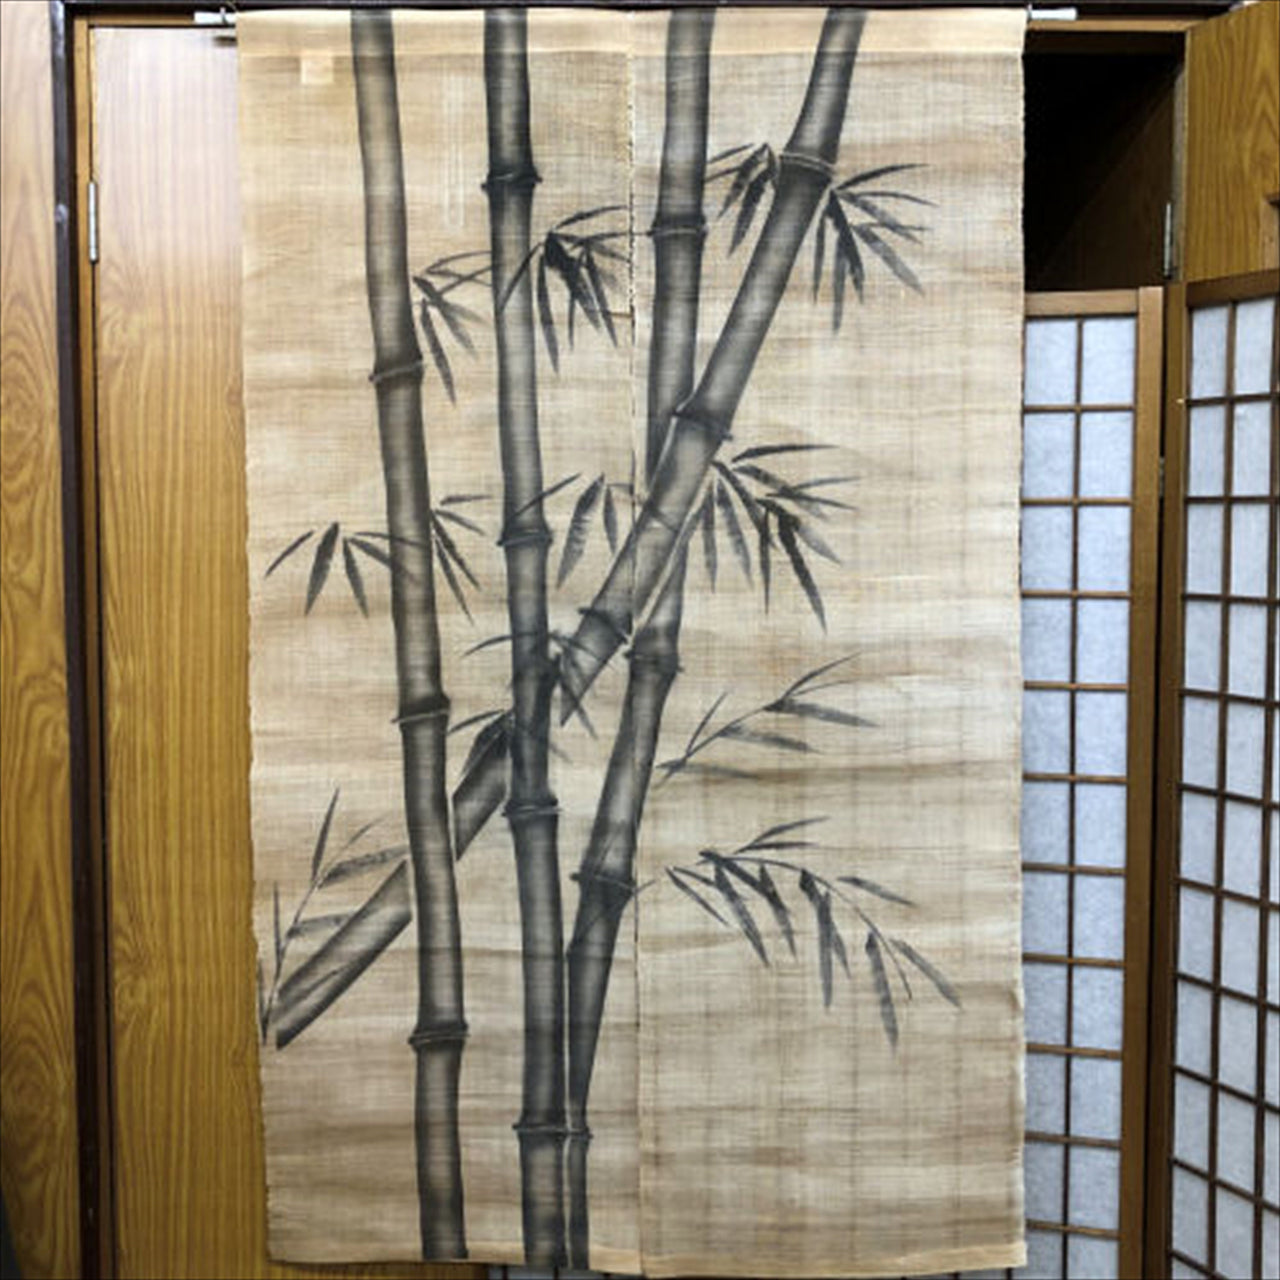 100％ Linen Japanese art Modern tapestry Japan 90×147cm Noren door curtain Wall hanging